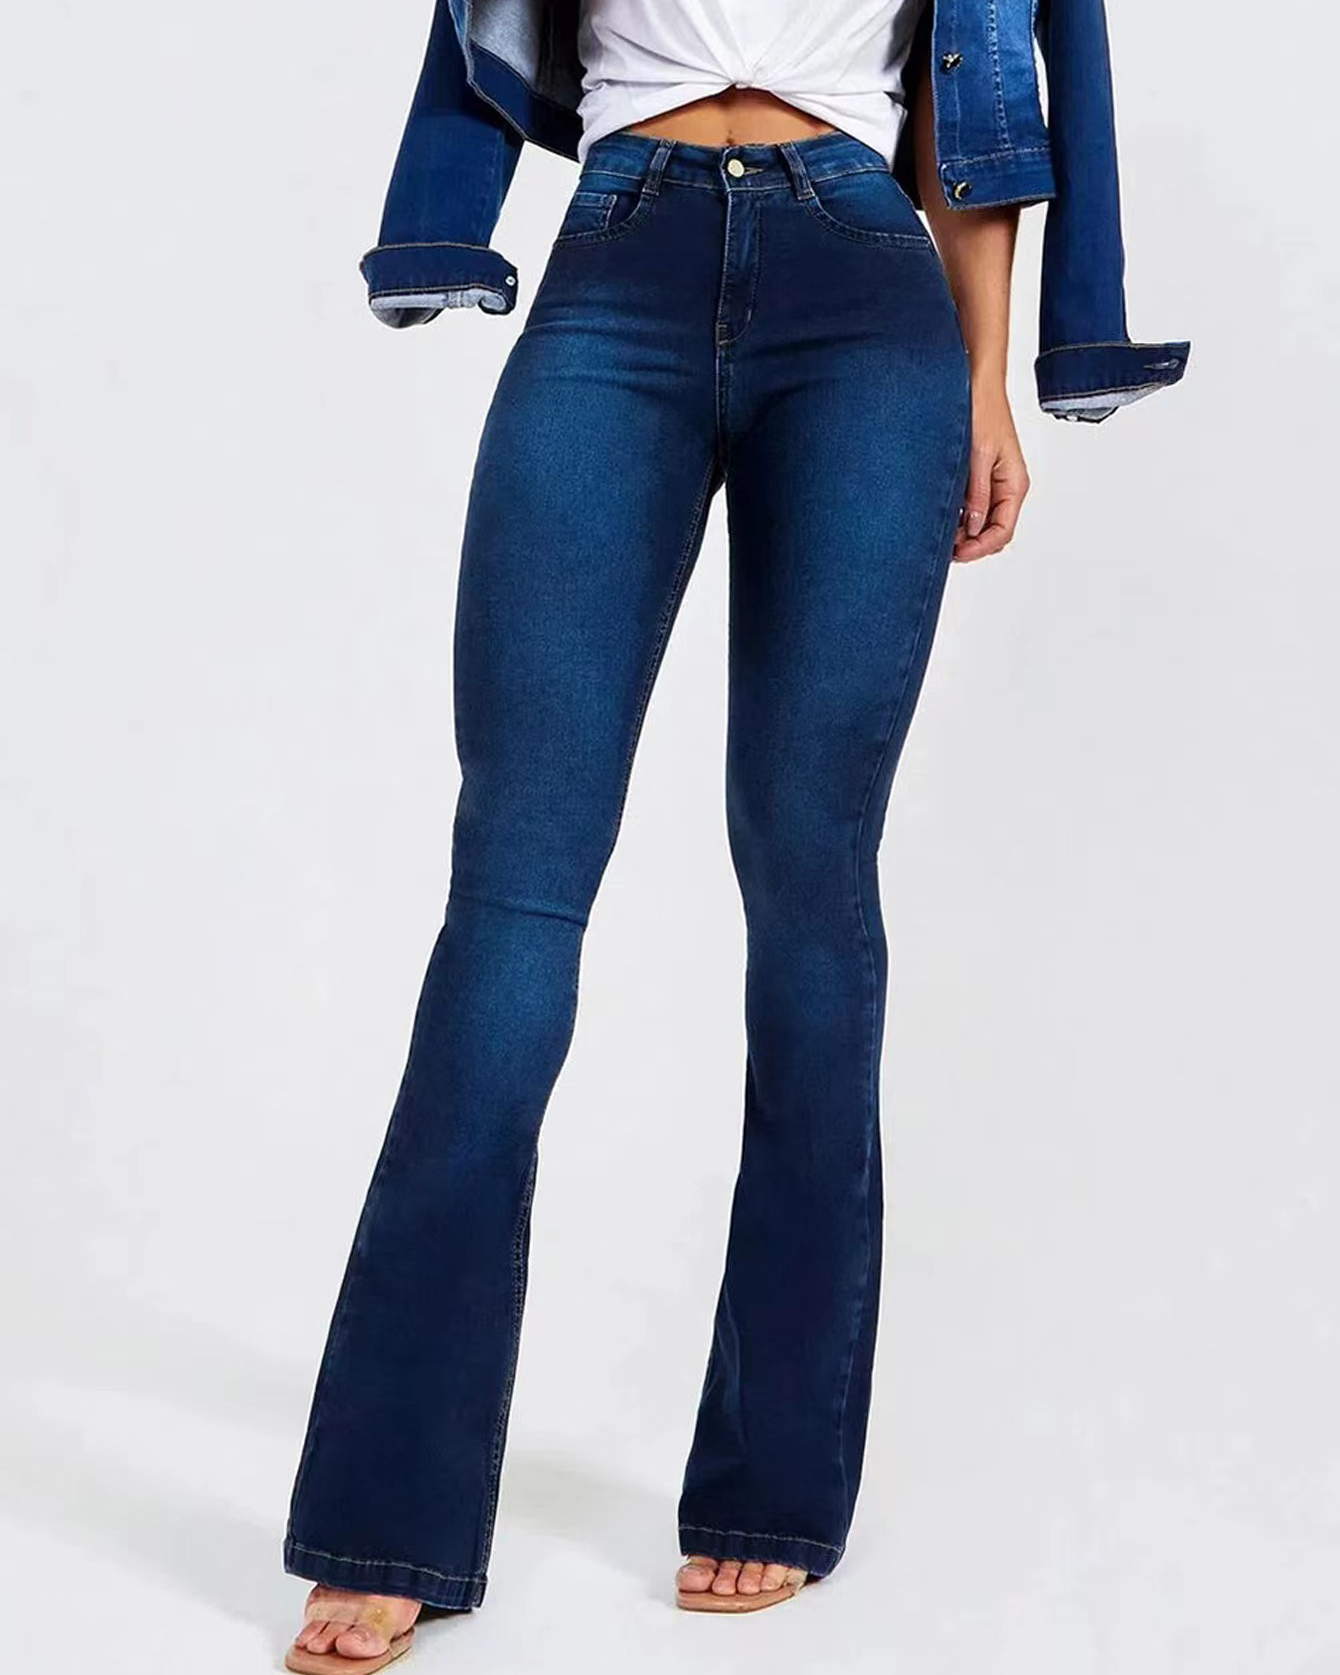 Curvy-faja on Instagram: Solid Color Skinny Jeans For Women